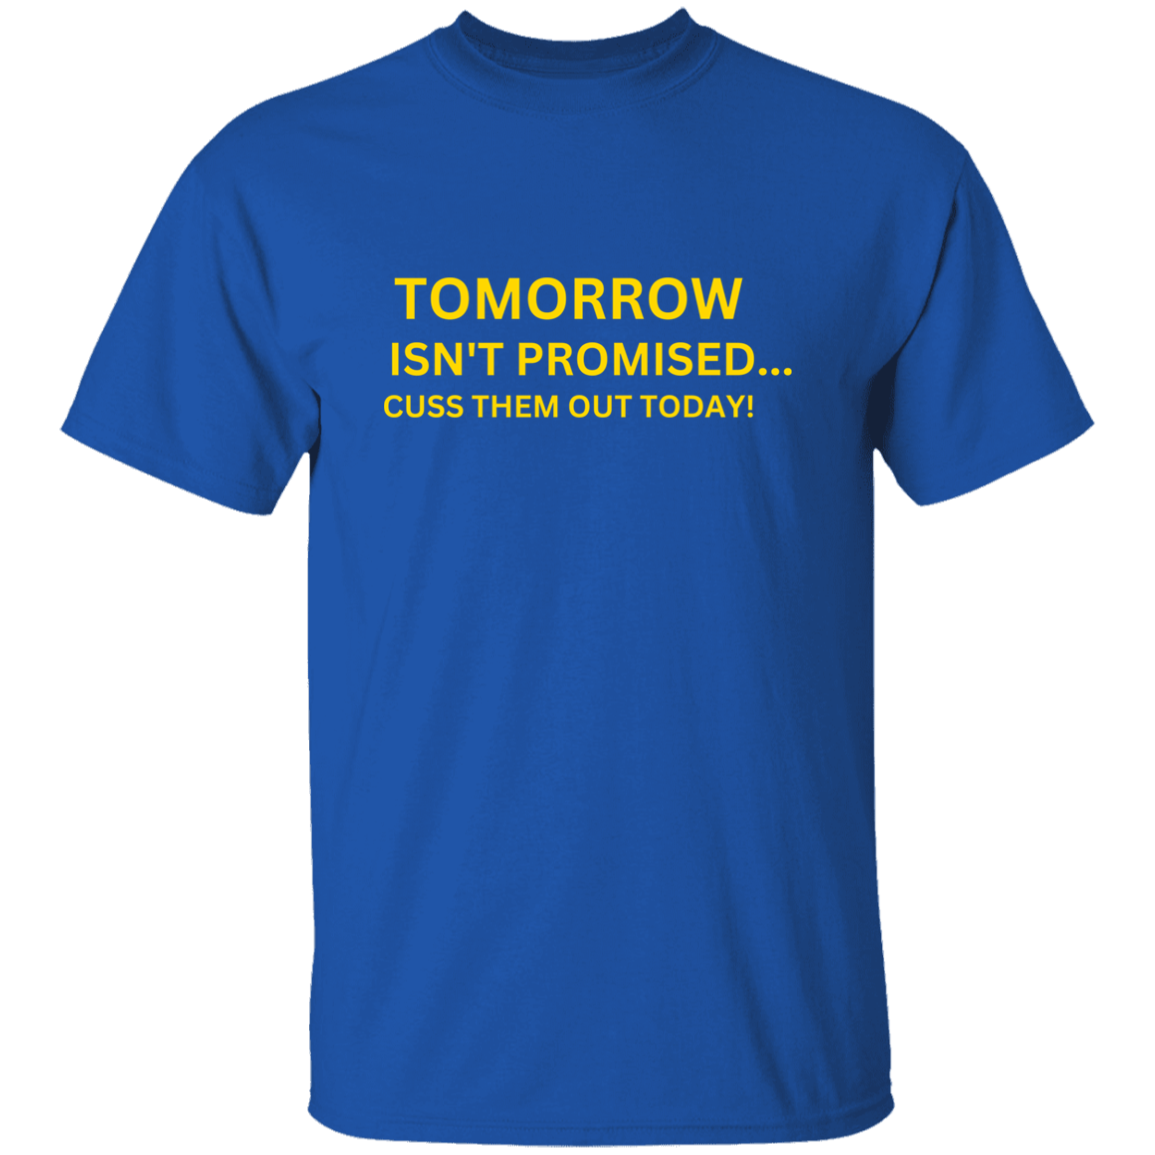 Tomorrow Isn't Promised T-Shirt, Funny Quote Shirts, Feminist Shirt, Novelty T-shirt, Sarcastic T-shirt